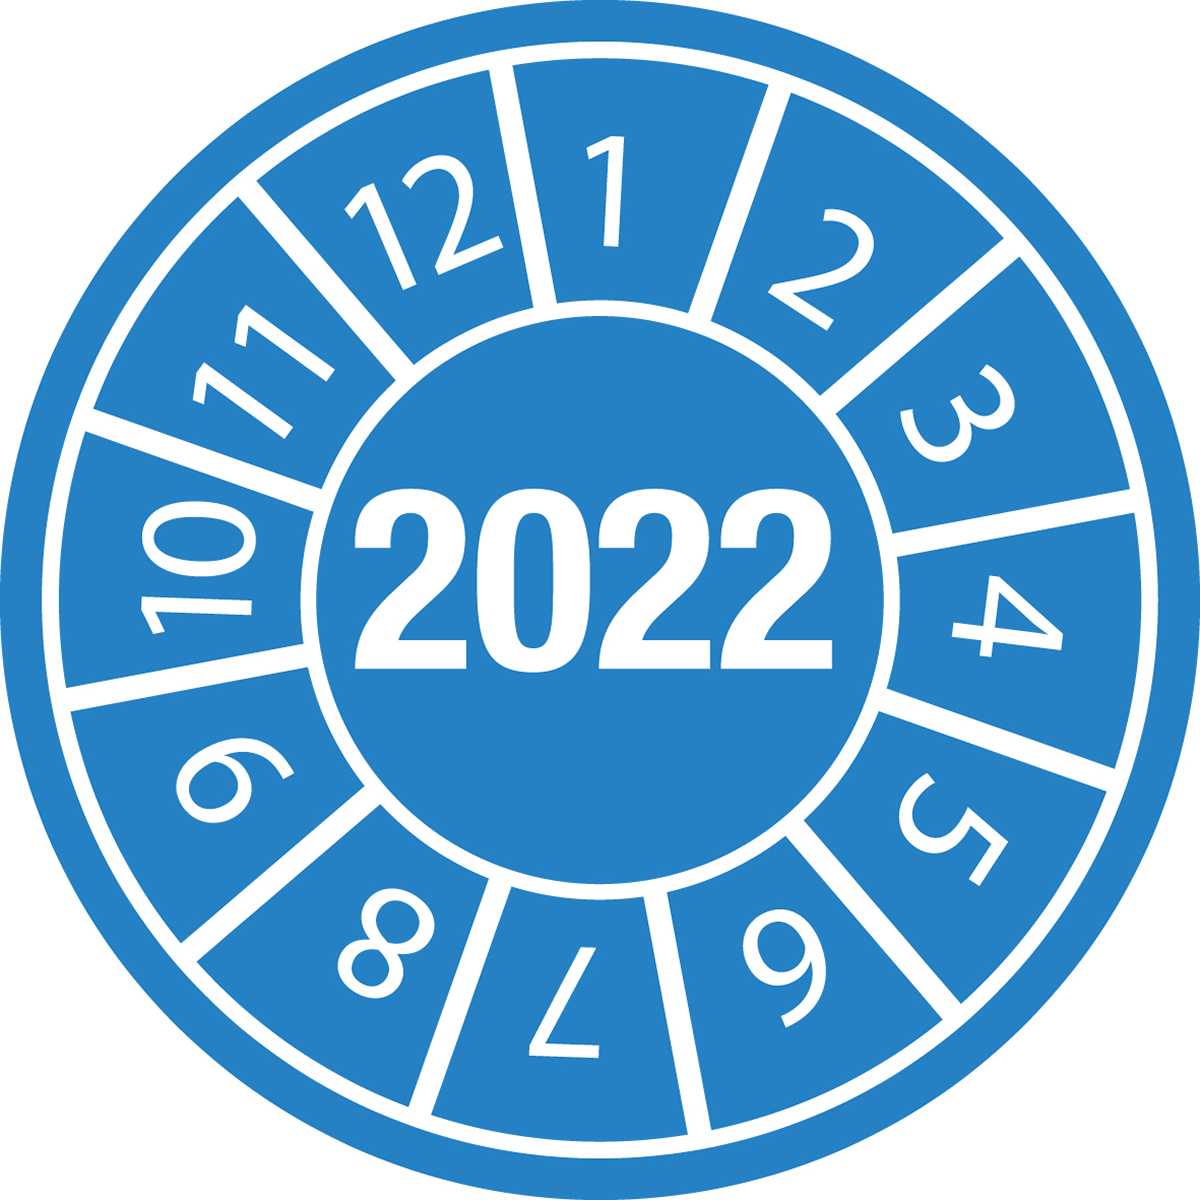 BRADY DATE 2022-DIA 15 B-429 DATE INSPECTION LBLS B-429 2022 - DIA 15 834140